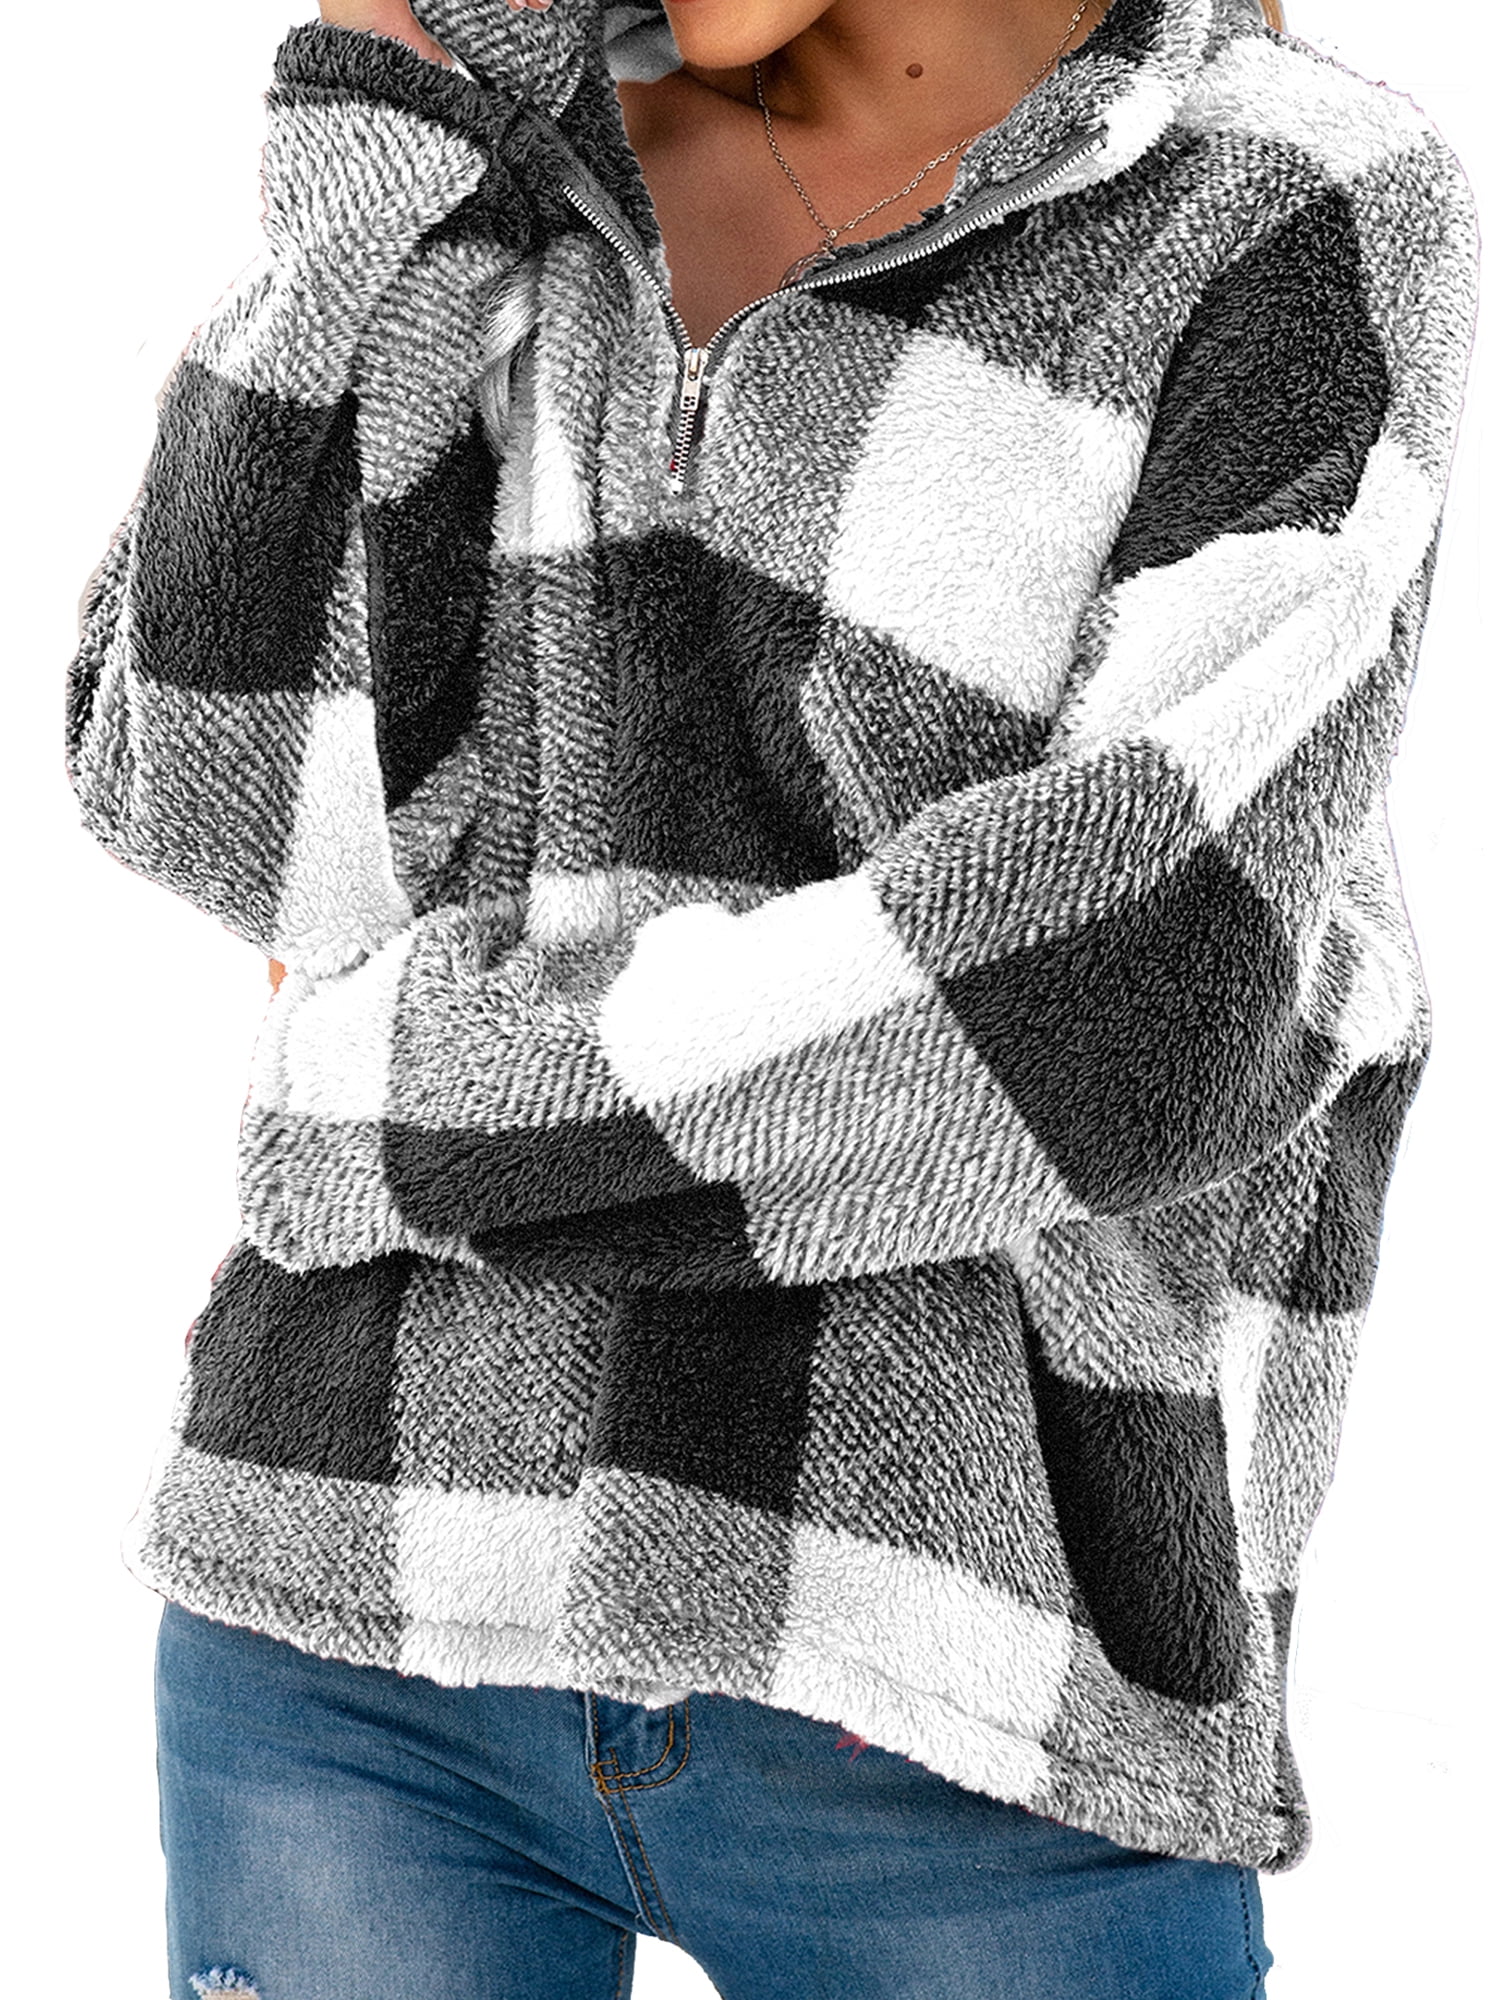 Yaolor Women Autumn Long Sleeve Checkerboard Sleeve Crop Top Hoodies Sweatshirt